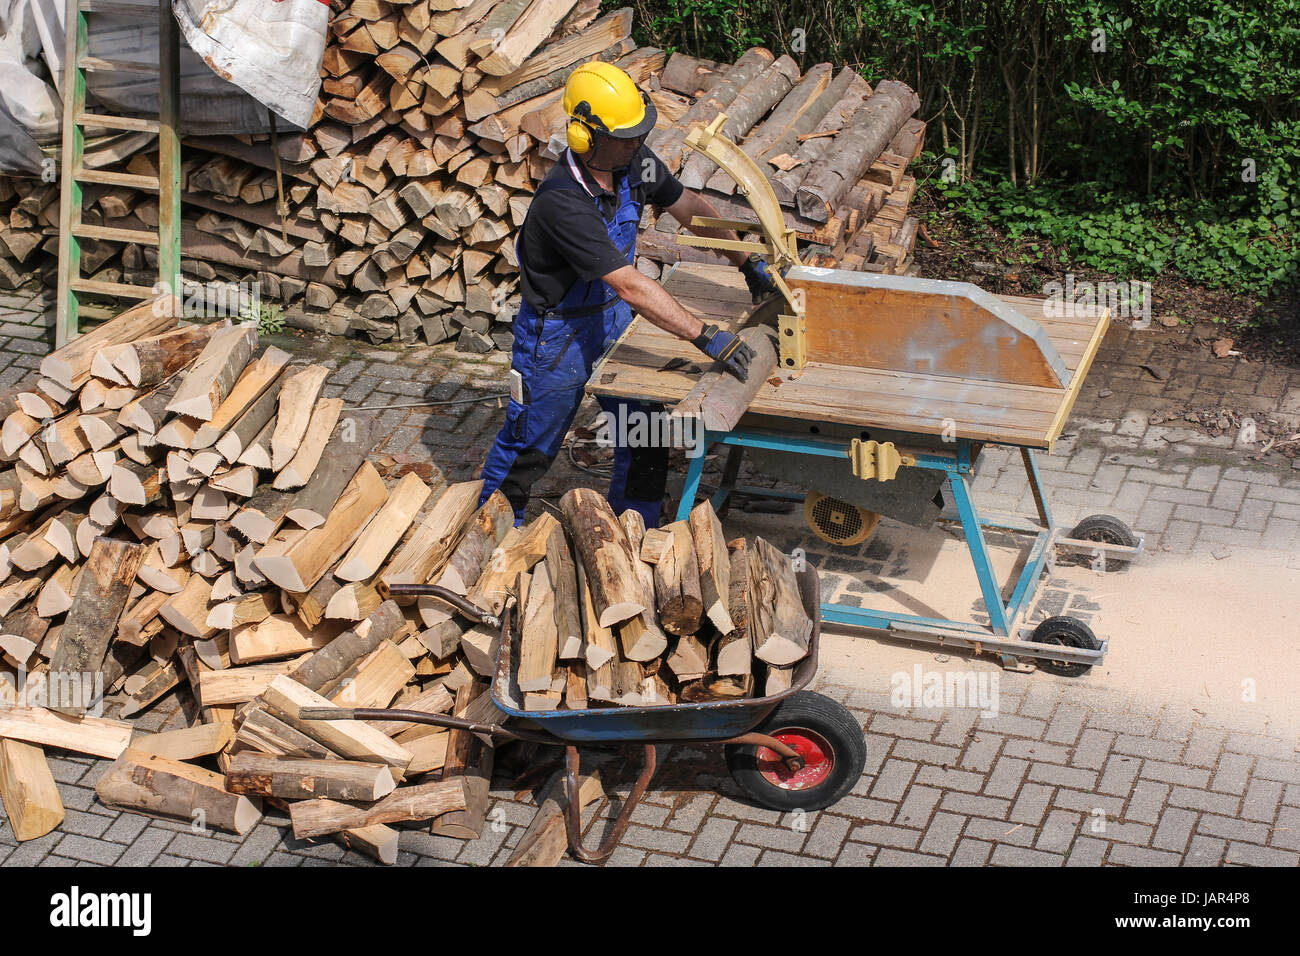 sawing firewood Stock Photo